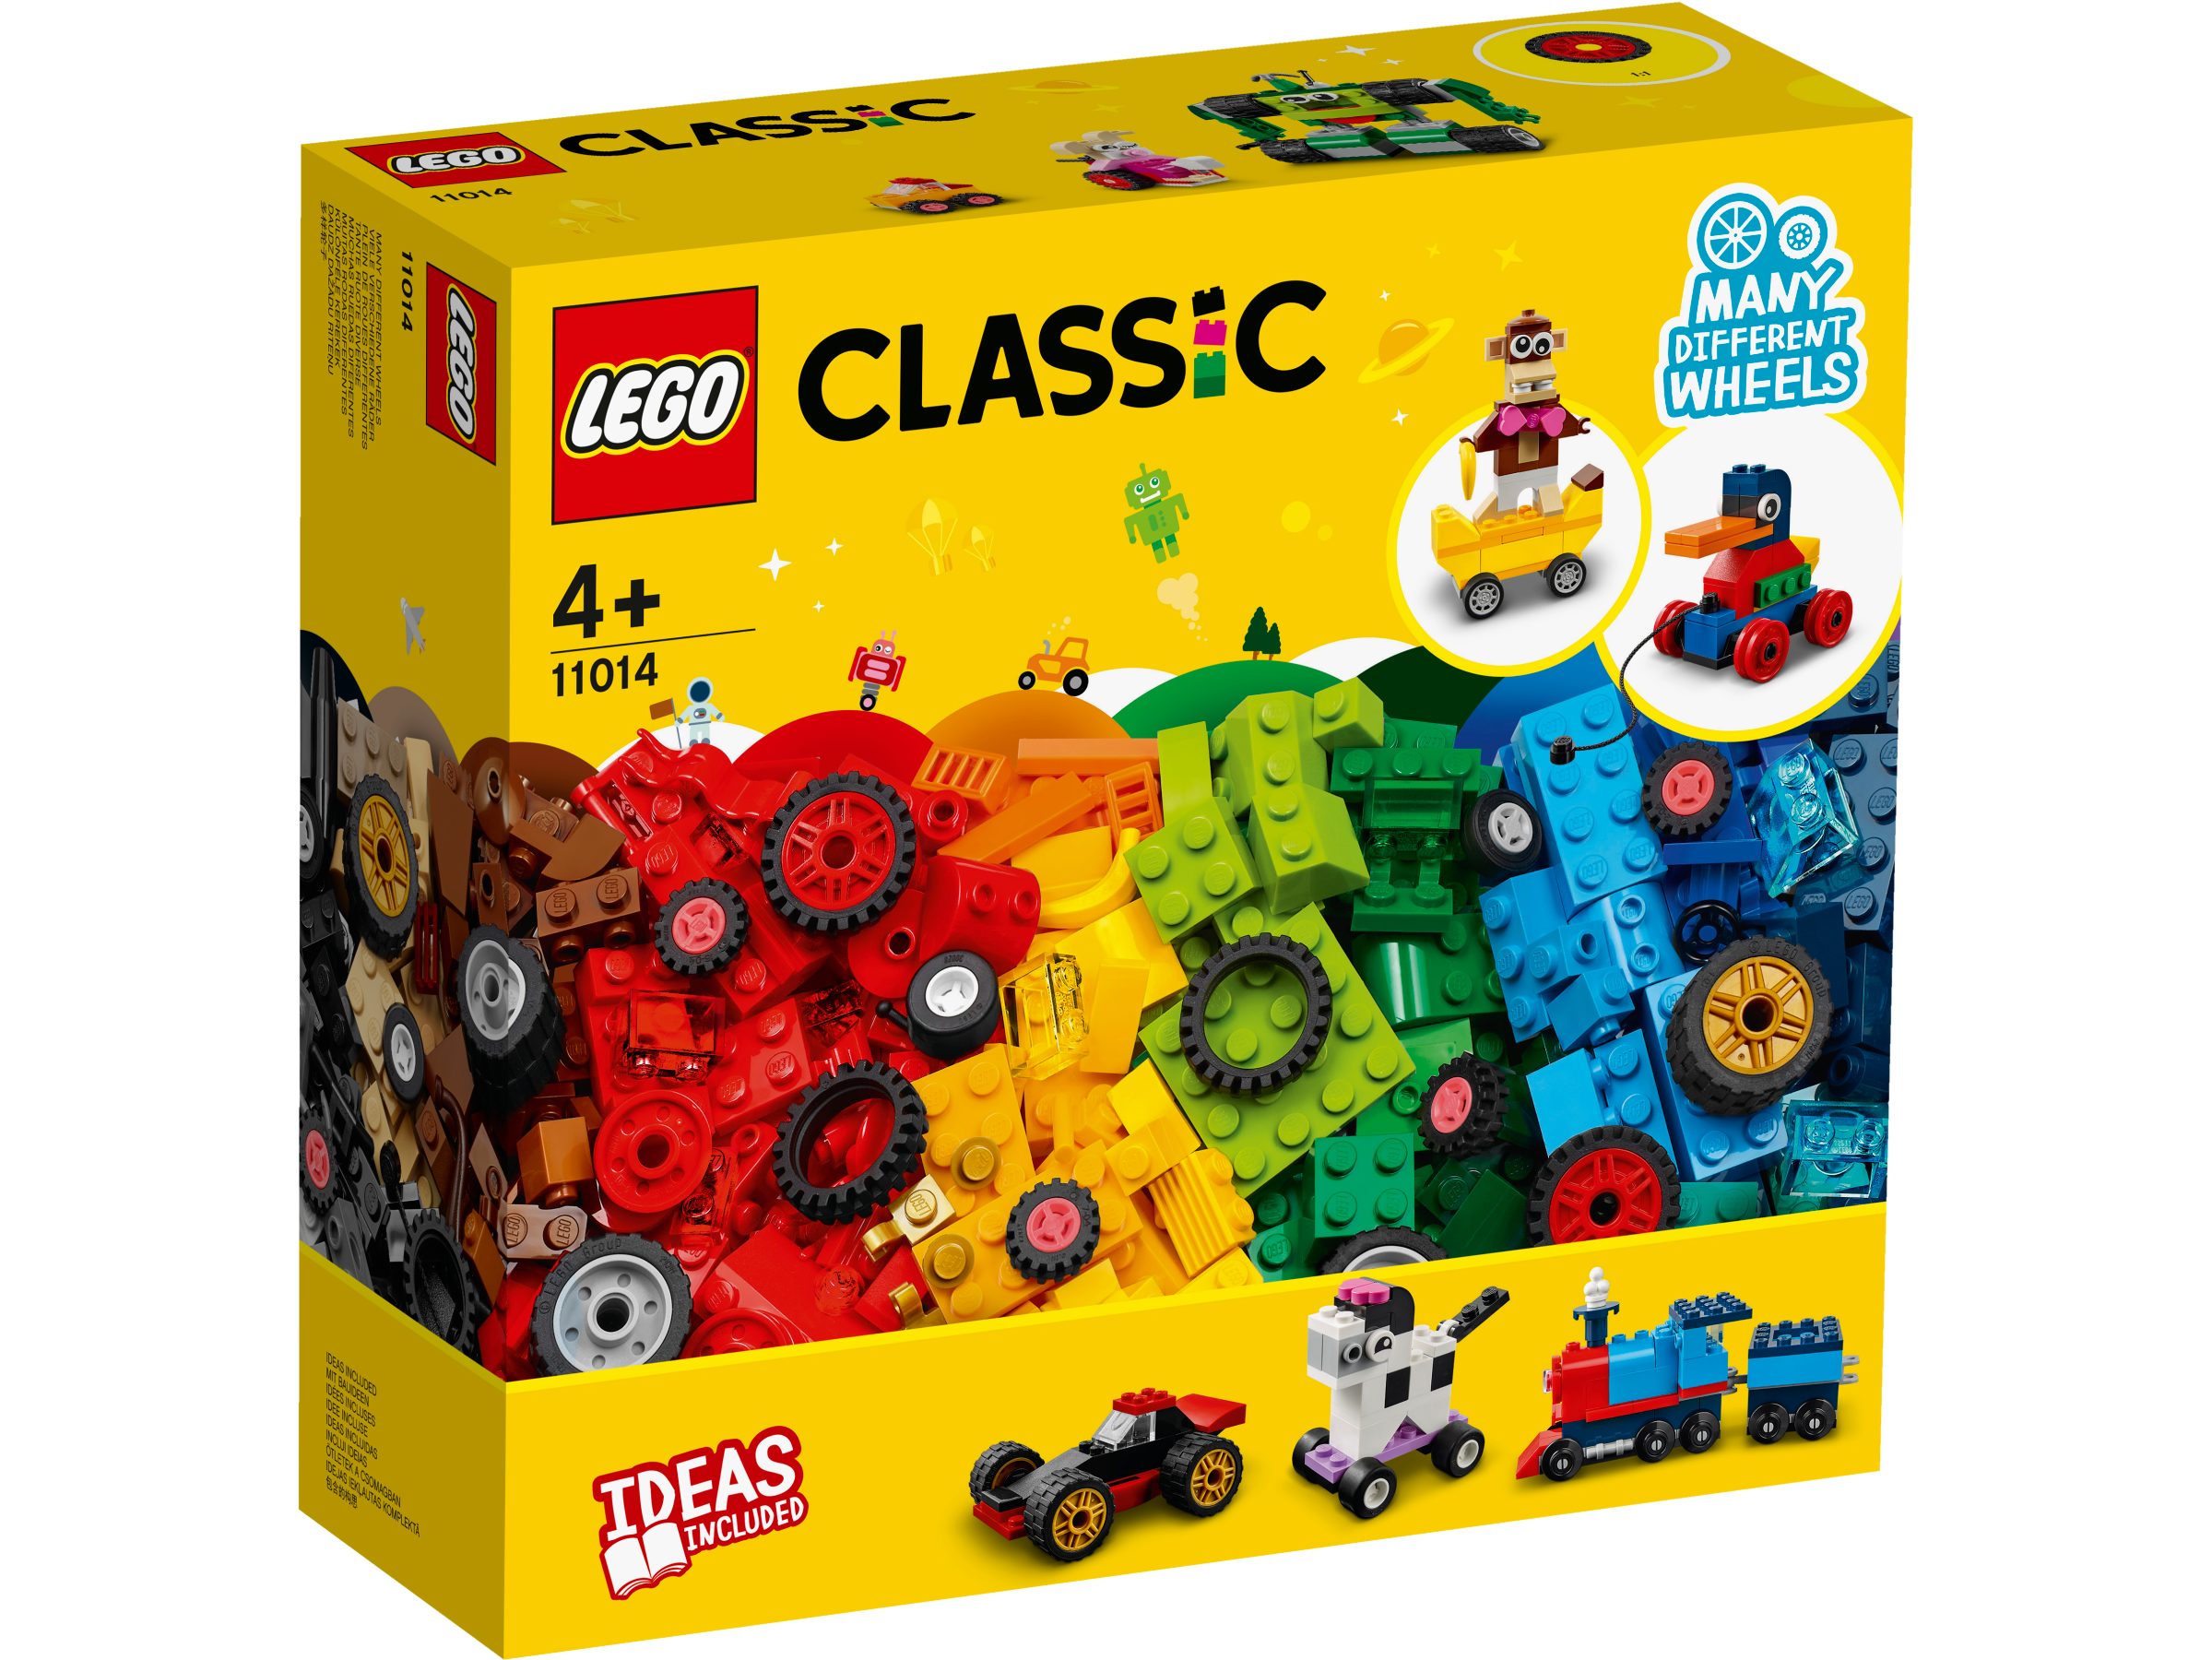 Lego 11014 Bricks and Wheels